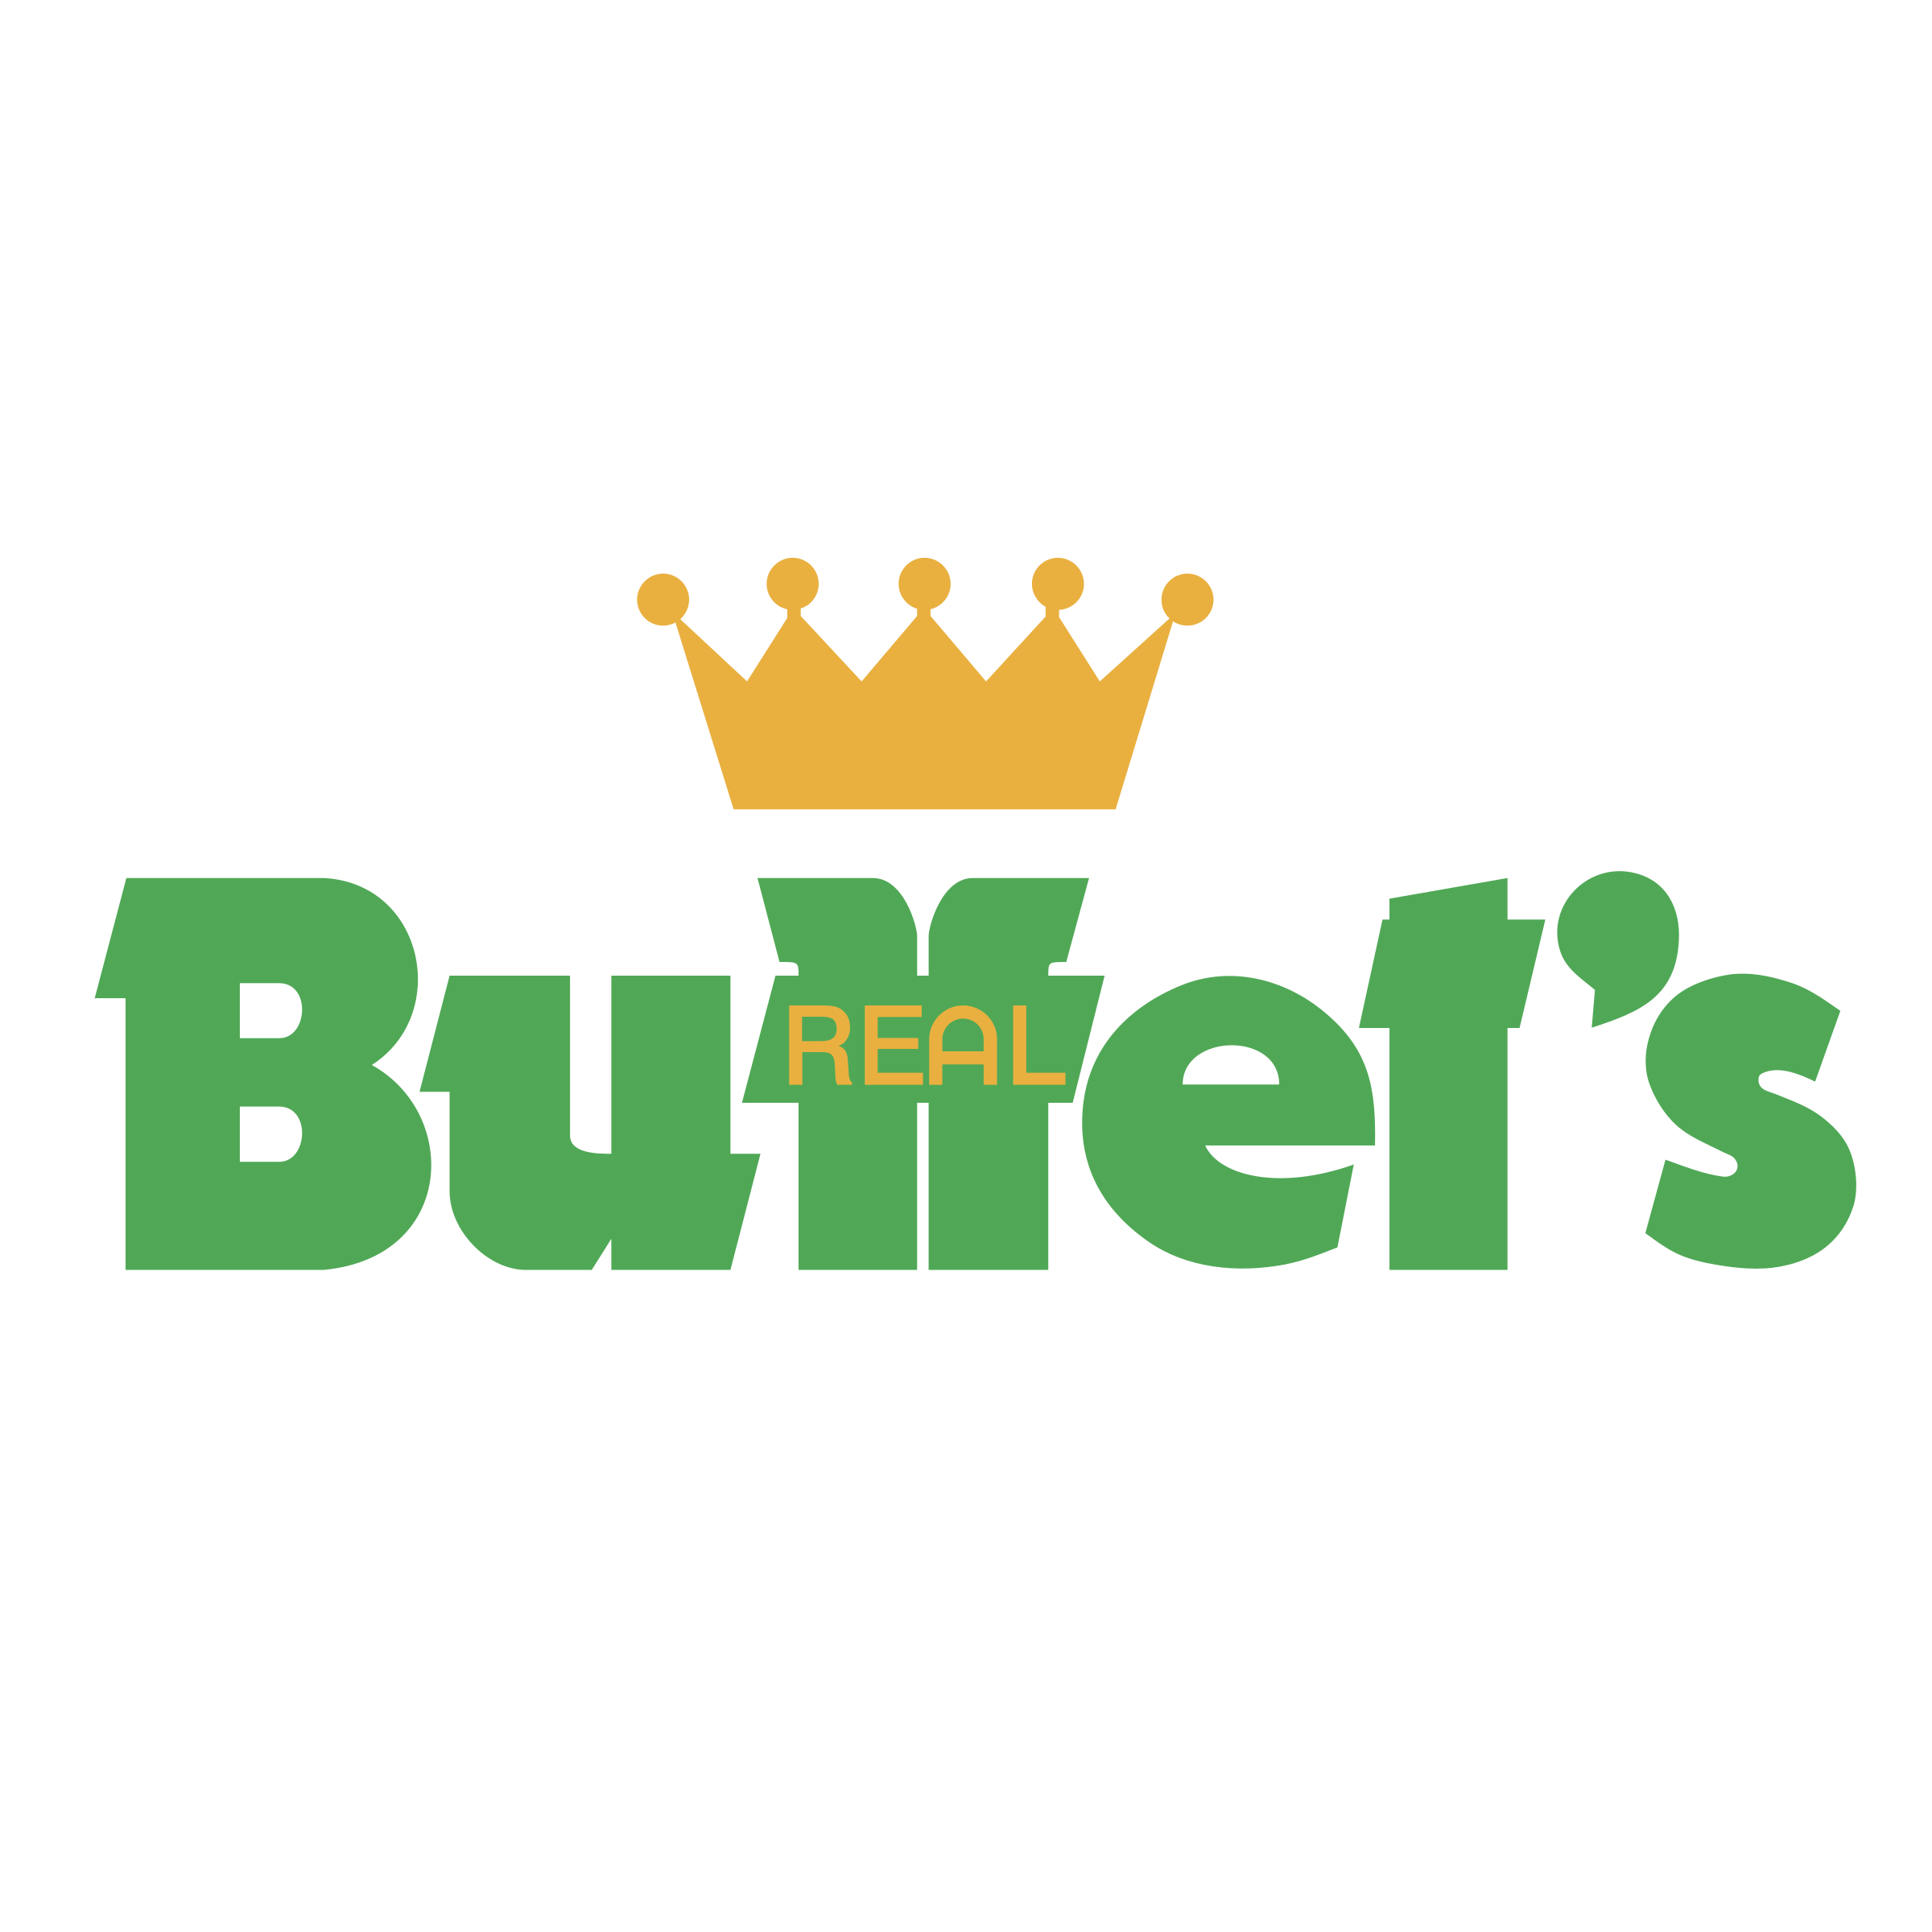 Bffet Logo - Real Buffet's Logo PNG Transparent & SVG Vector